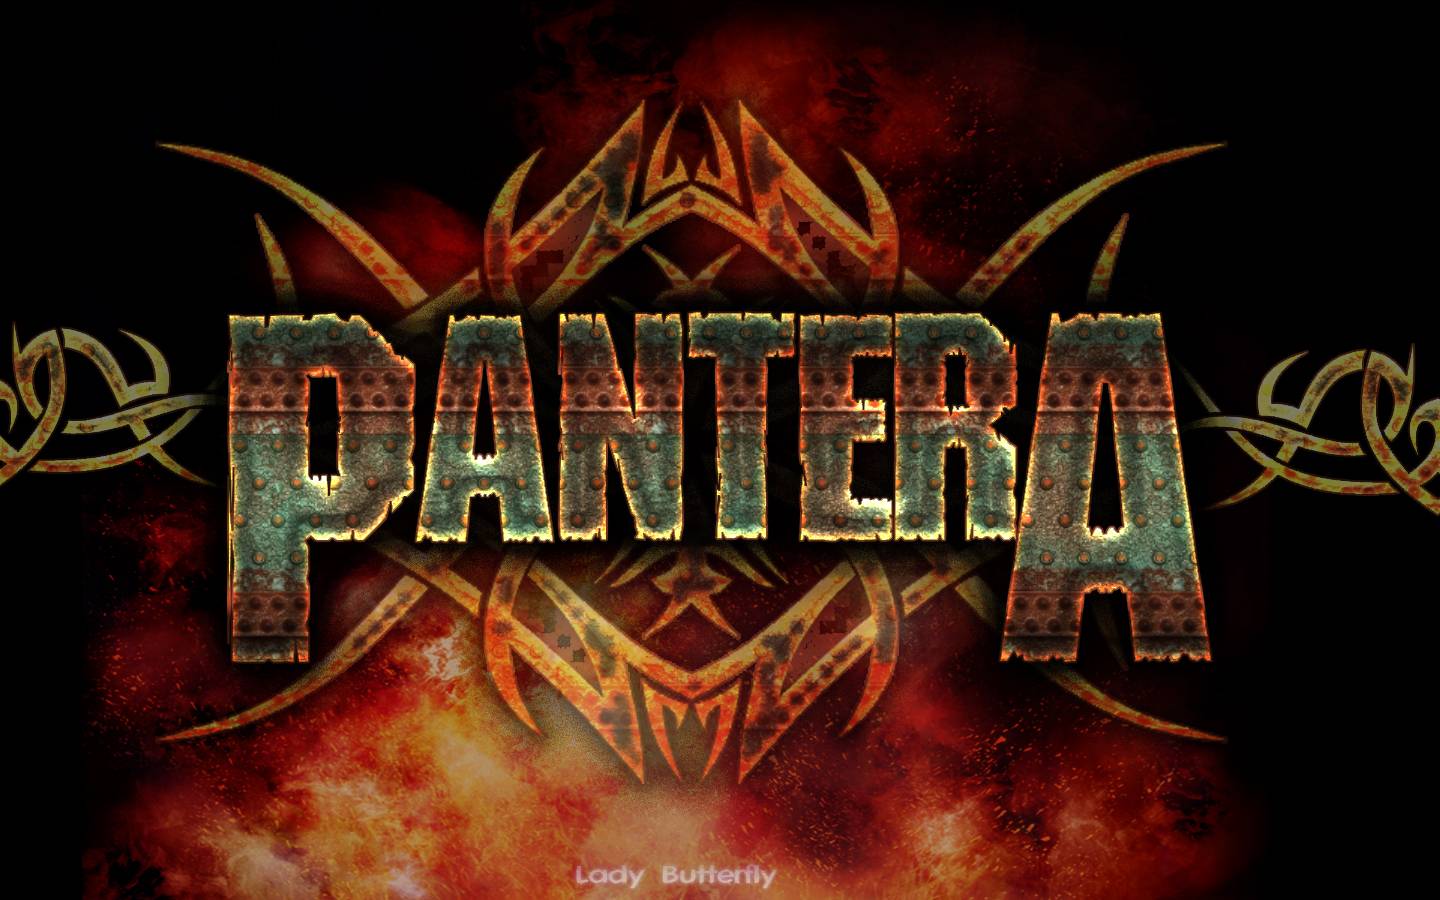 Pantera Cowboys from hell wallpaper by ethanator420 on DeviantArt